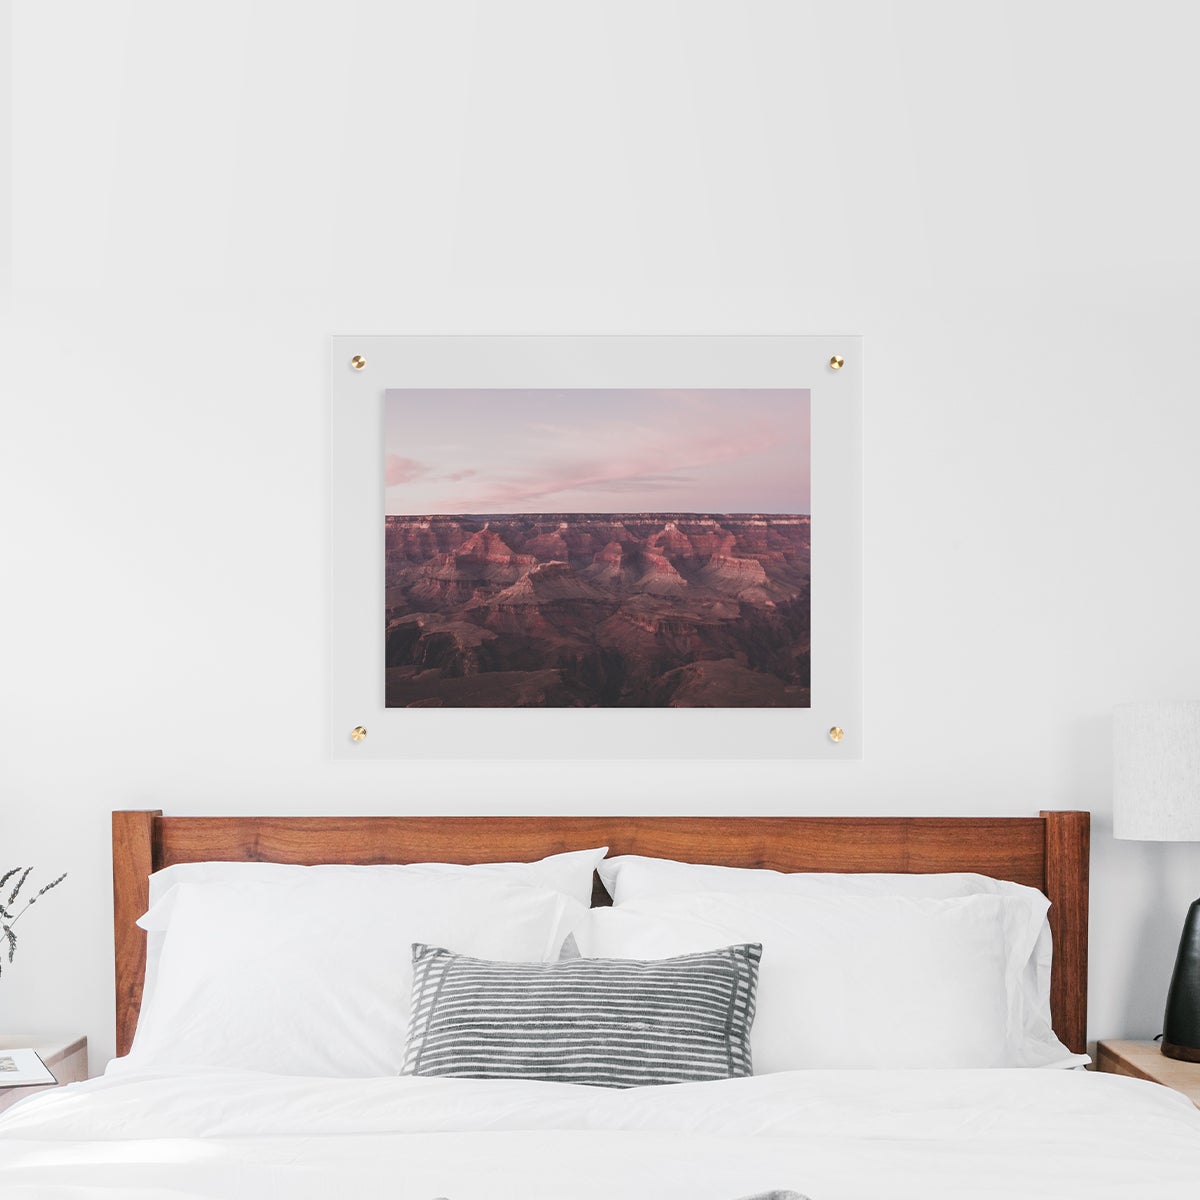 Floating frame with desert landscape hanging above bed with white bedspread